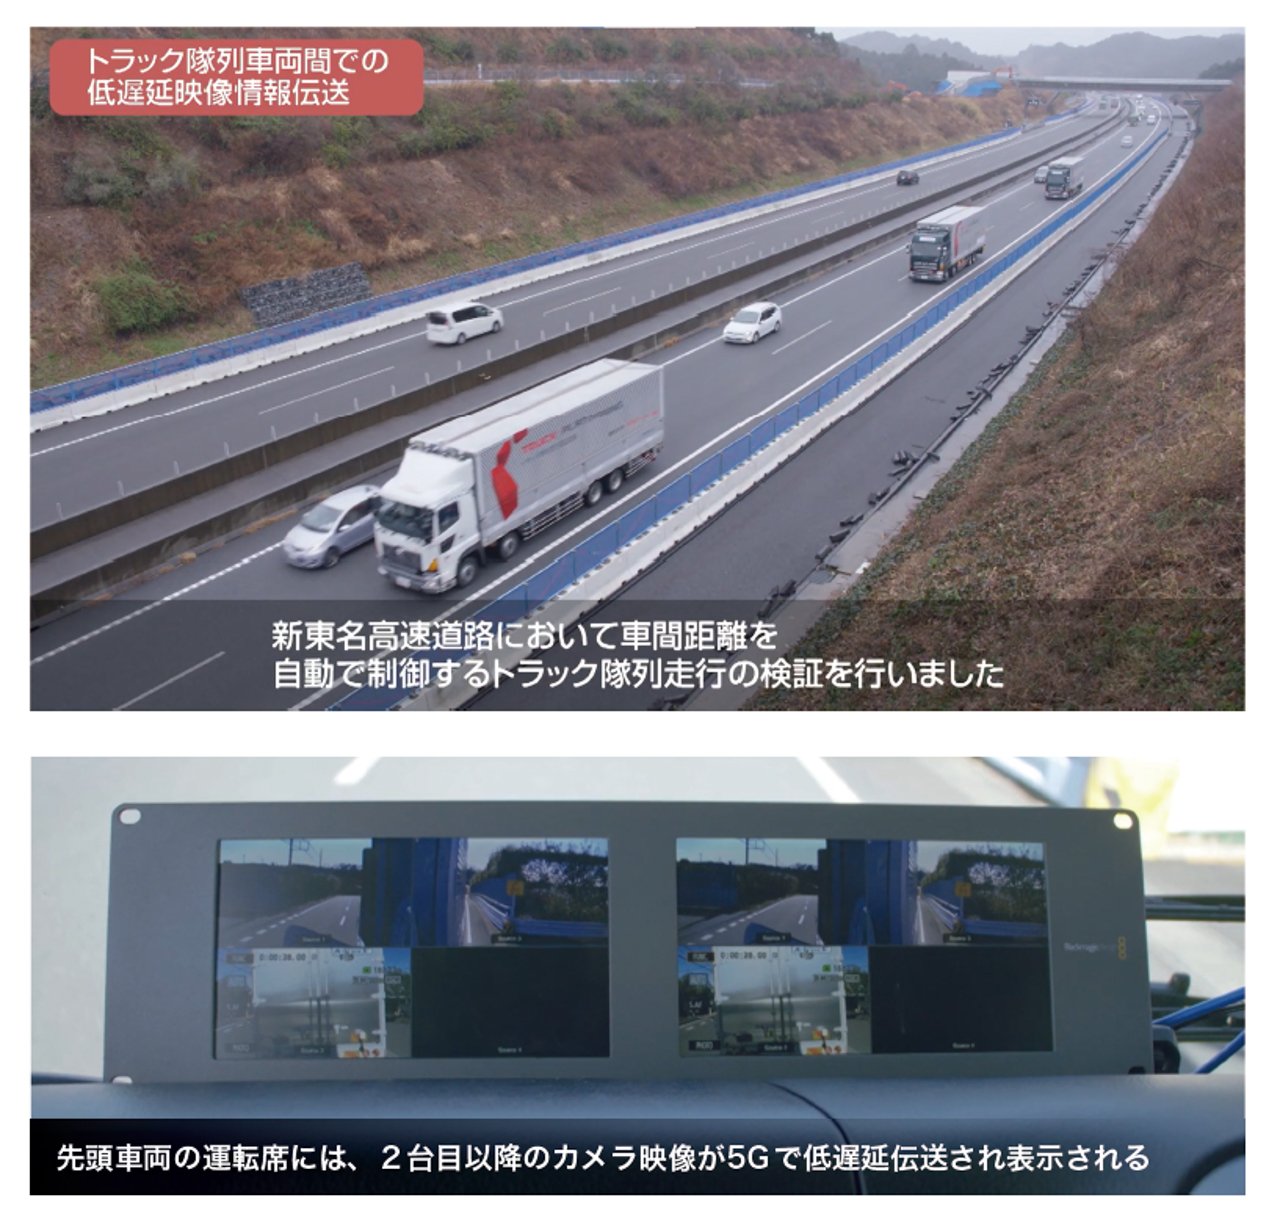 5G総合実証実験におけるトラック隊列走行の様子